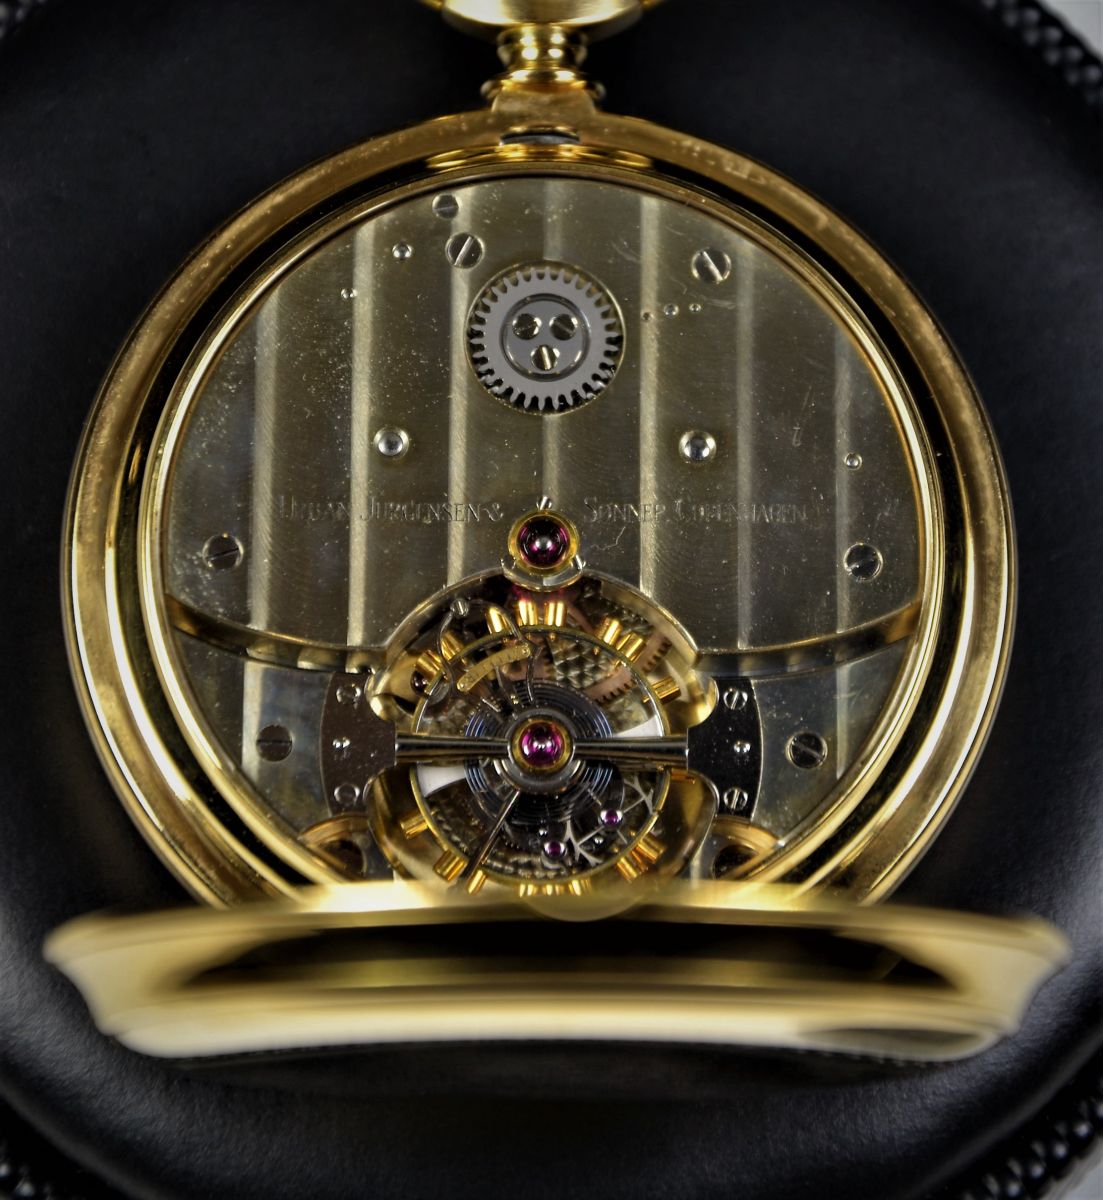  Fantastic 18 carat gold pocket watch with tourbillon. 36 hour power reserve. Signed Urban Jurgensen....